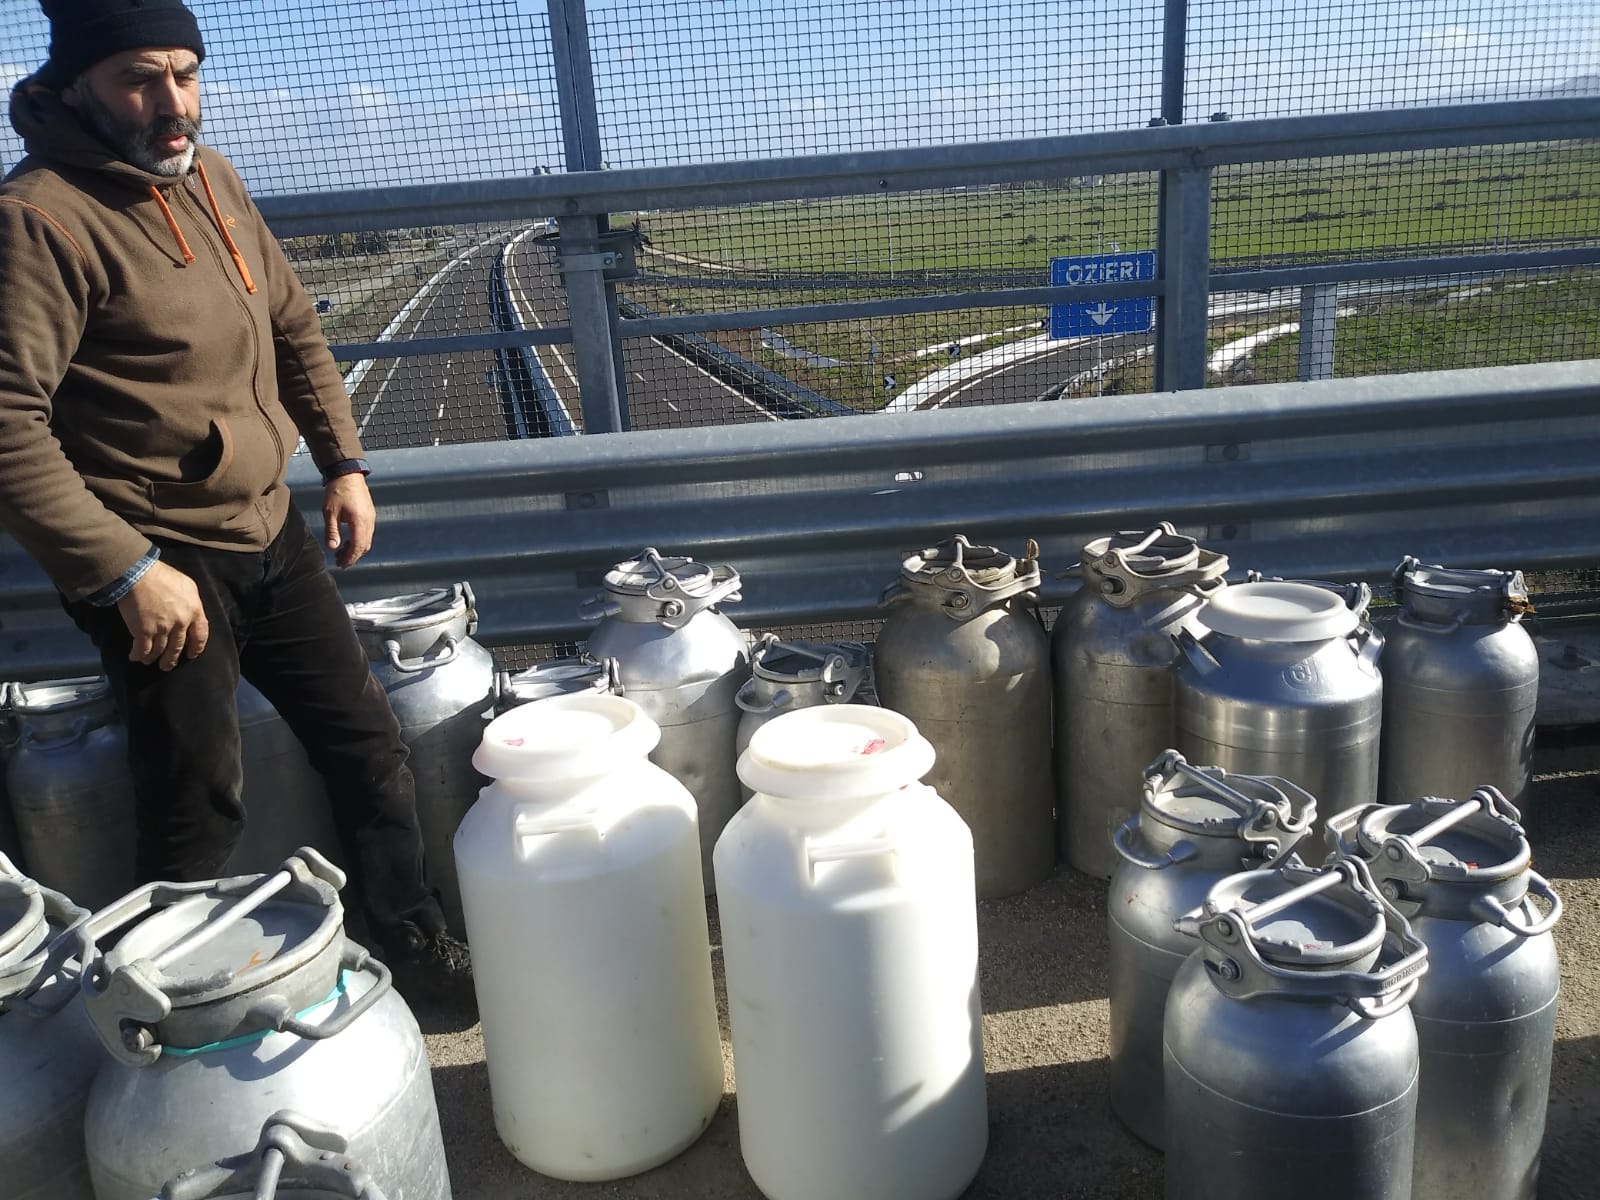 protesta pastori sardi prezzo latte blocco olbia sassari ozieri 5